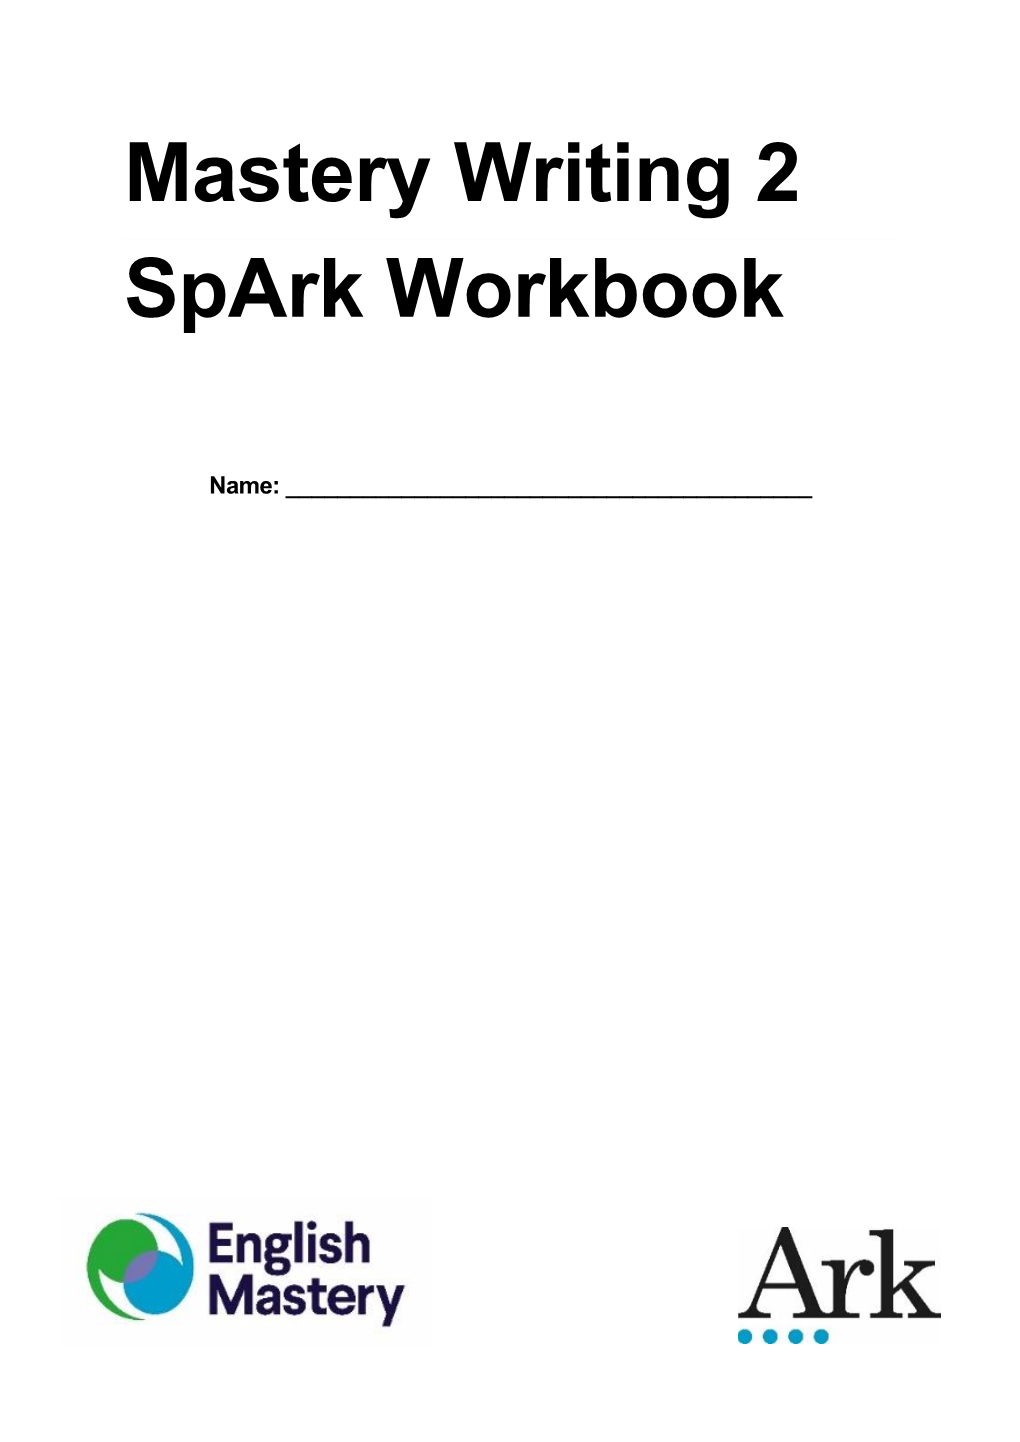 Mastery Writing 2 Spark Workbook